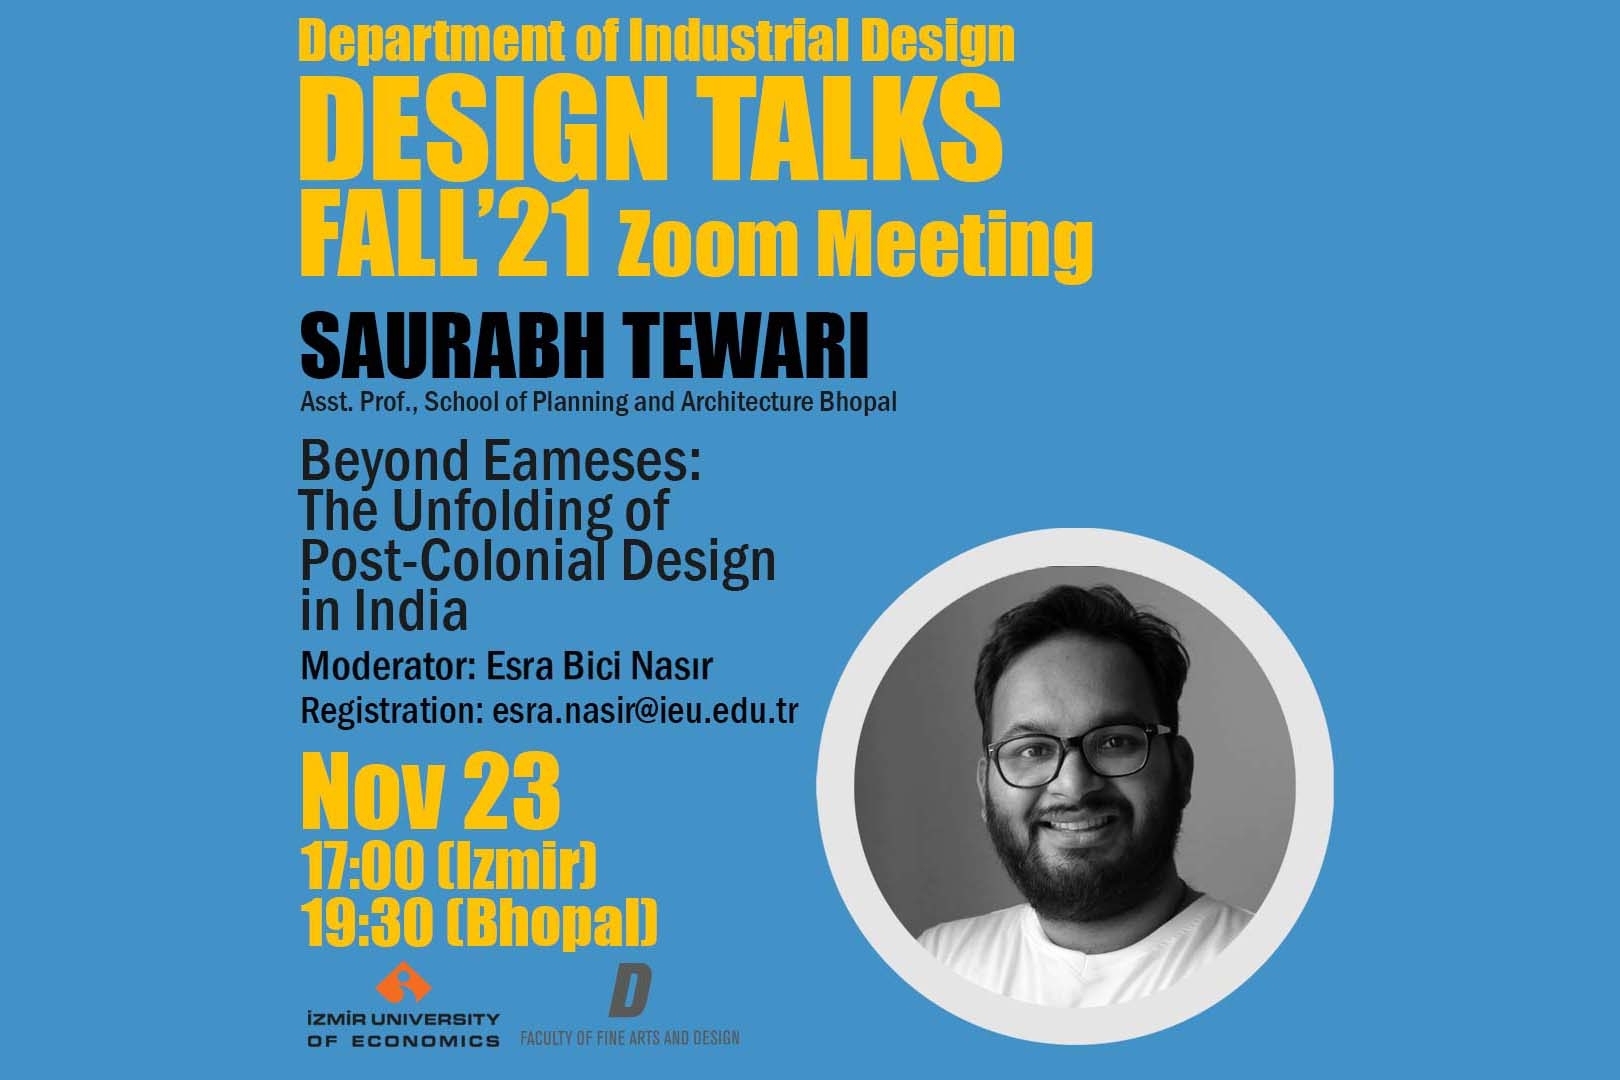 Design Talks Fall '21 continues with Dr. Saurabh Tewari